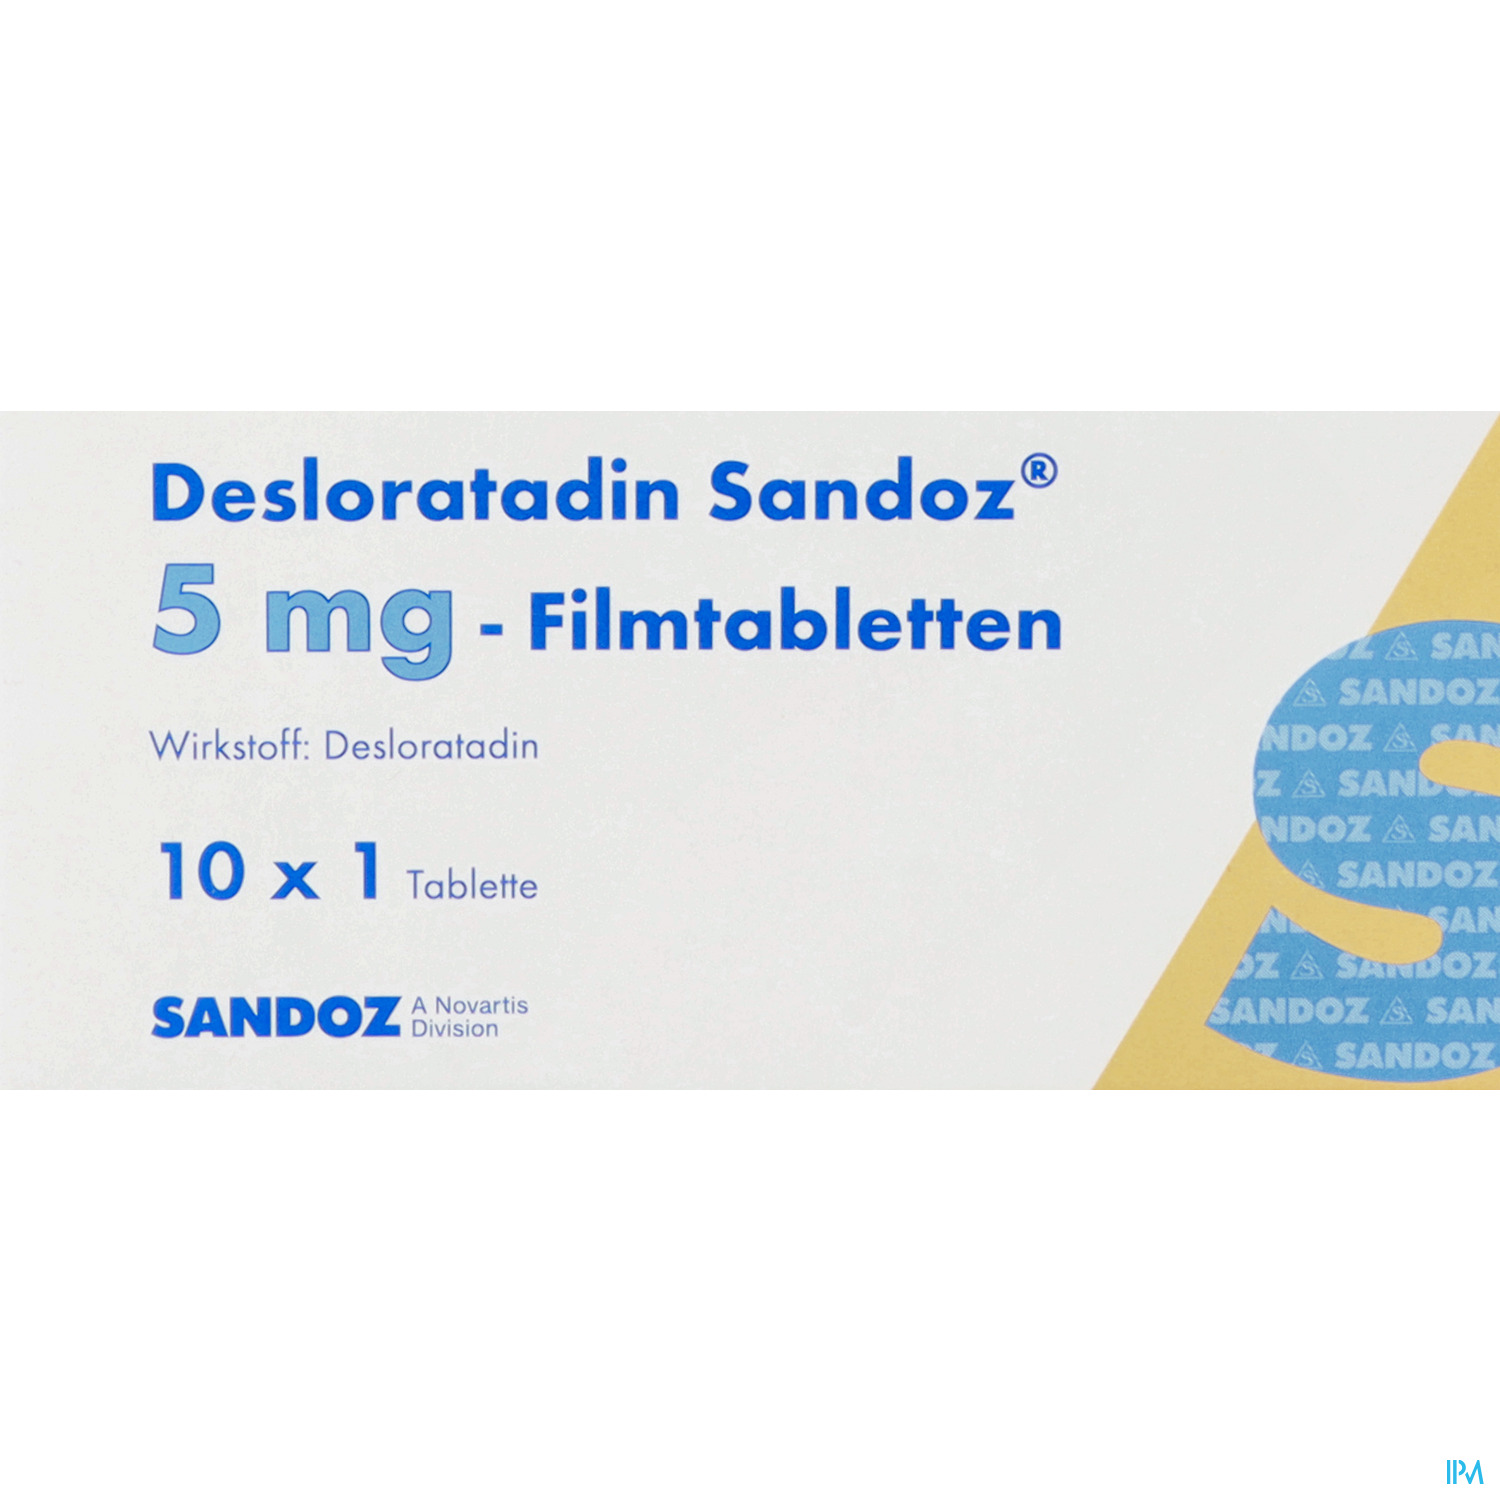 Desloratadin Sandoz 5 mg - Filmtabletten